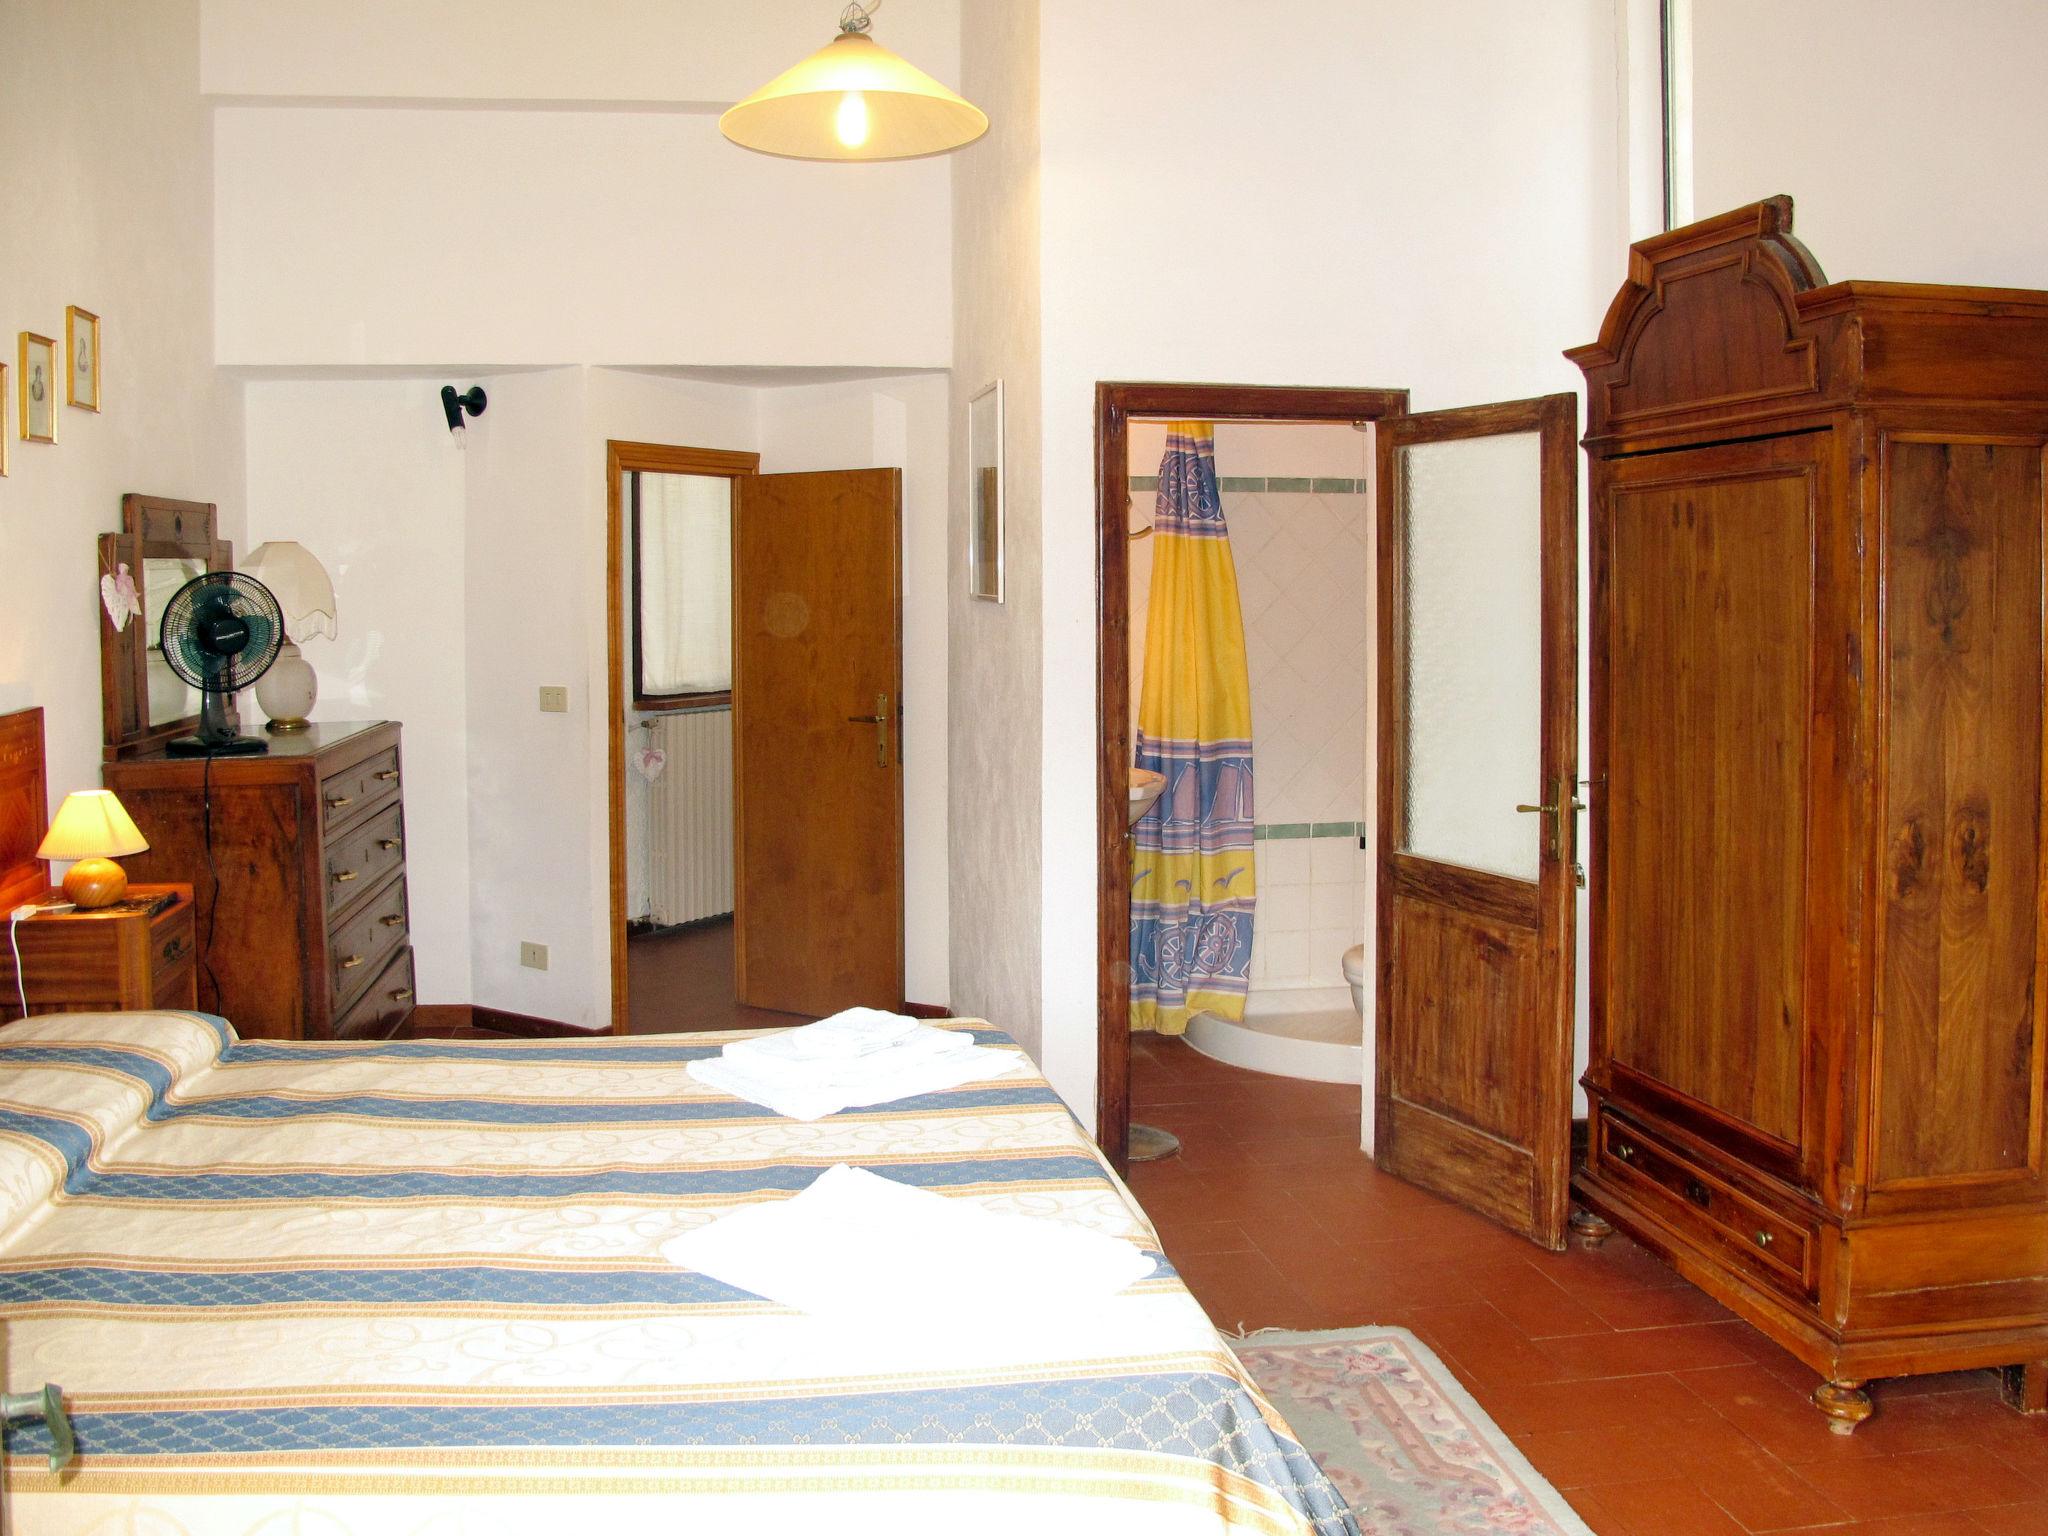 Foto 39 - Casa con 4 camere da letto a San Gimignano con piscina e giardino